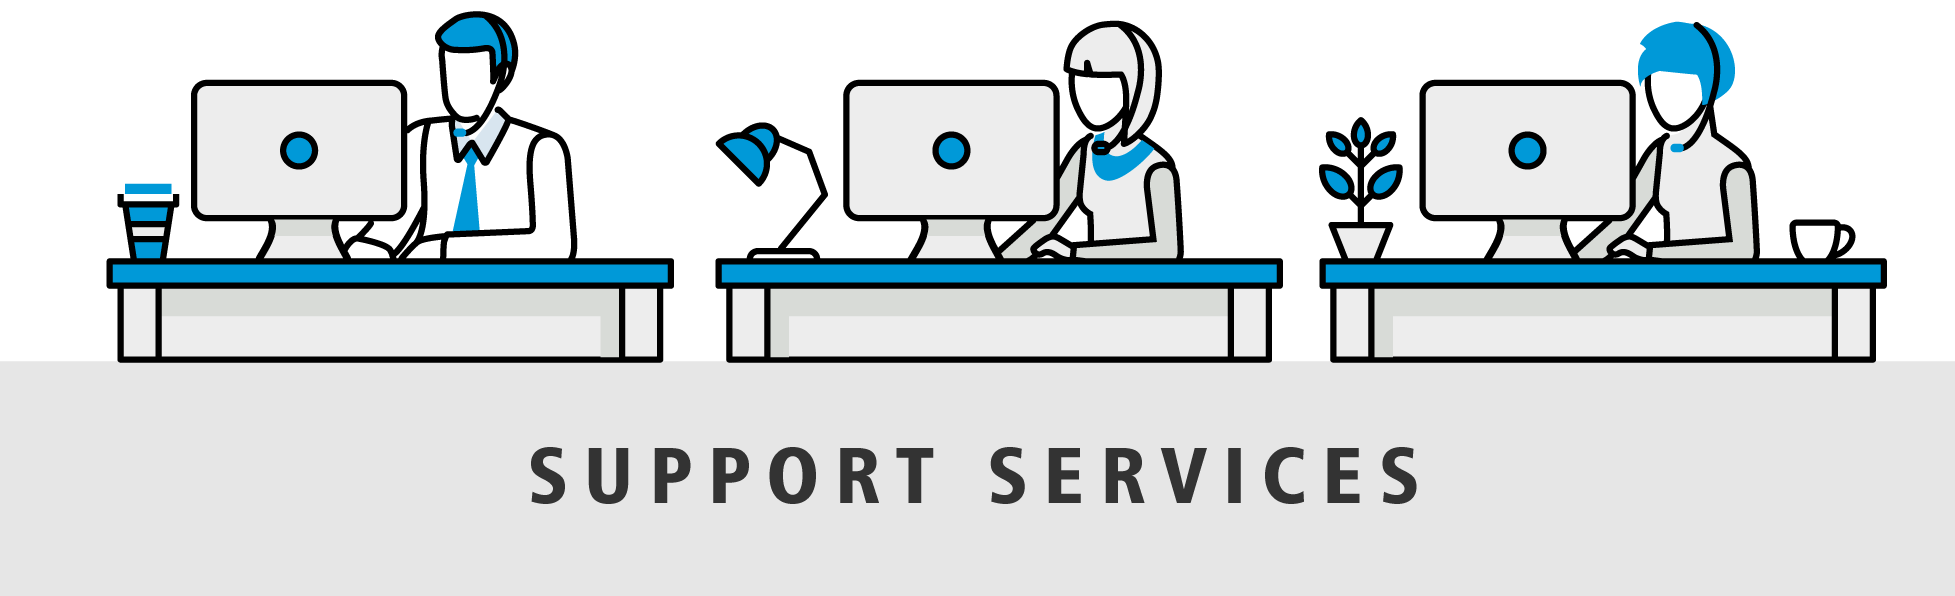 Support team support support com. Картинка техподдержки. Картина техподдержка. Support картинка. Техподдержка картинка.